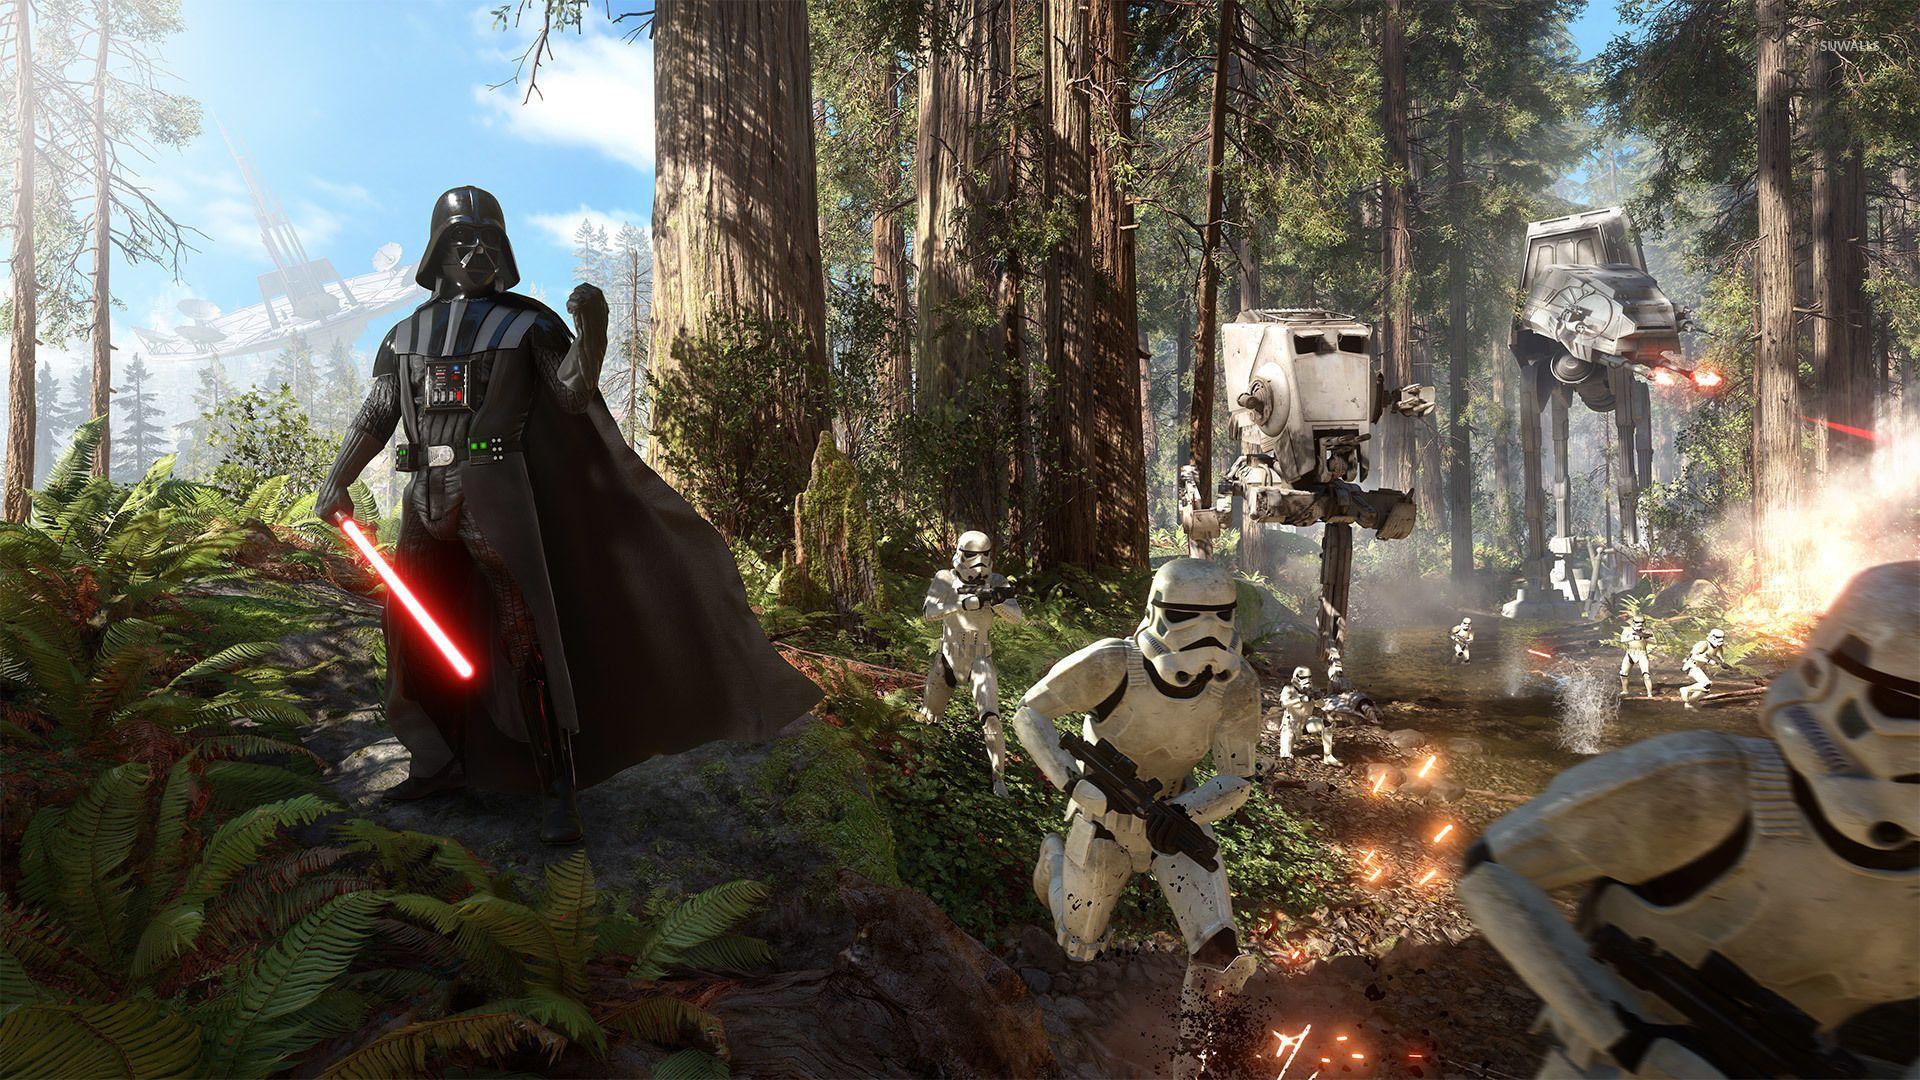 Darth Vader and Stormtroopers in Star Wars: Battlefront wallpaper